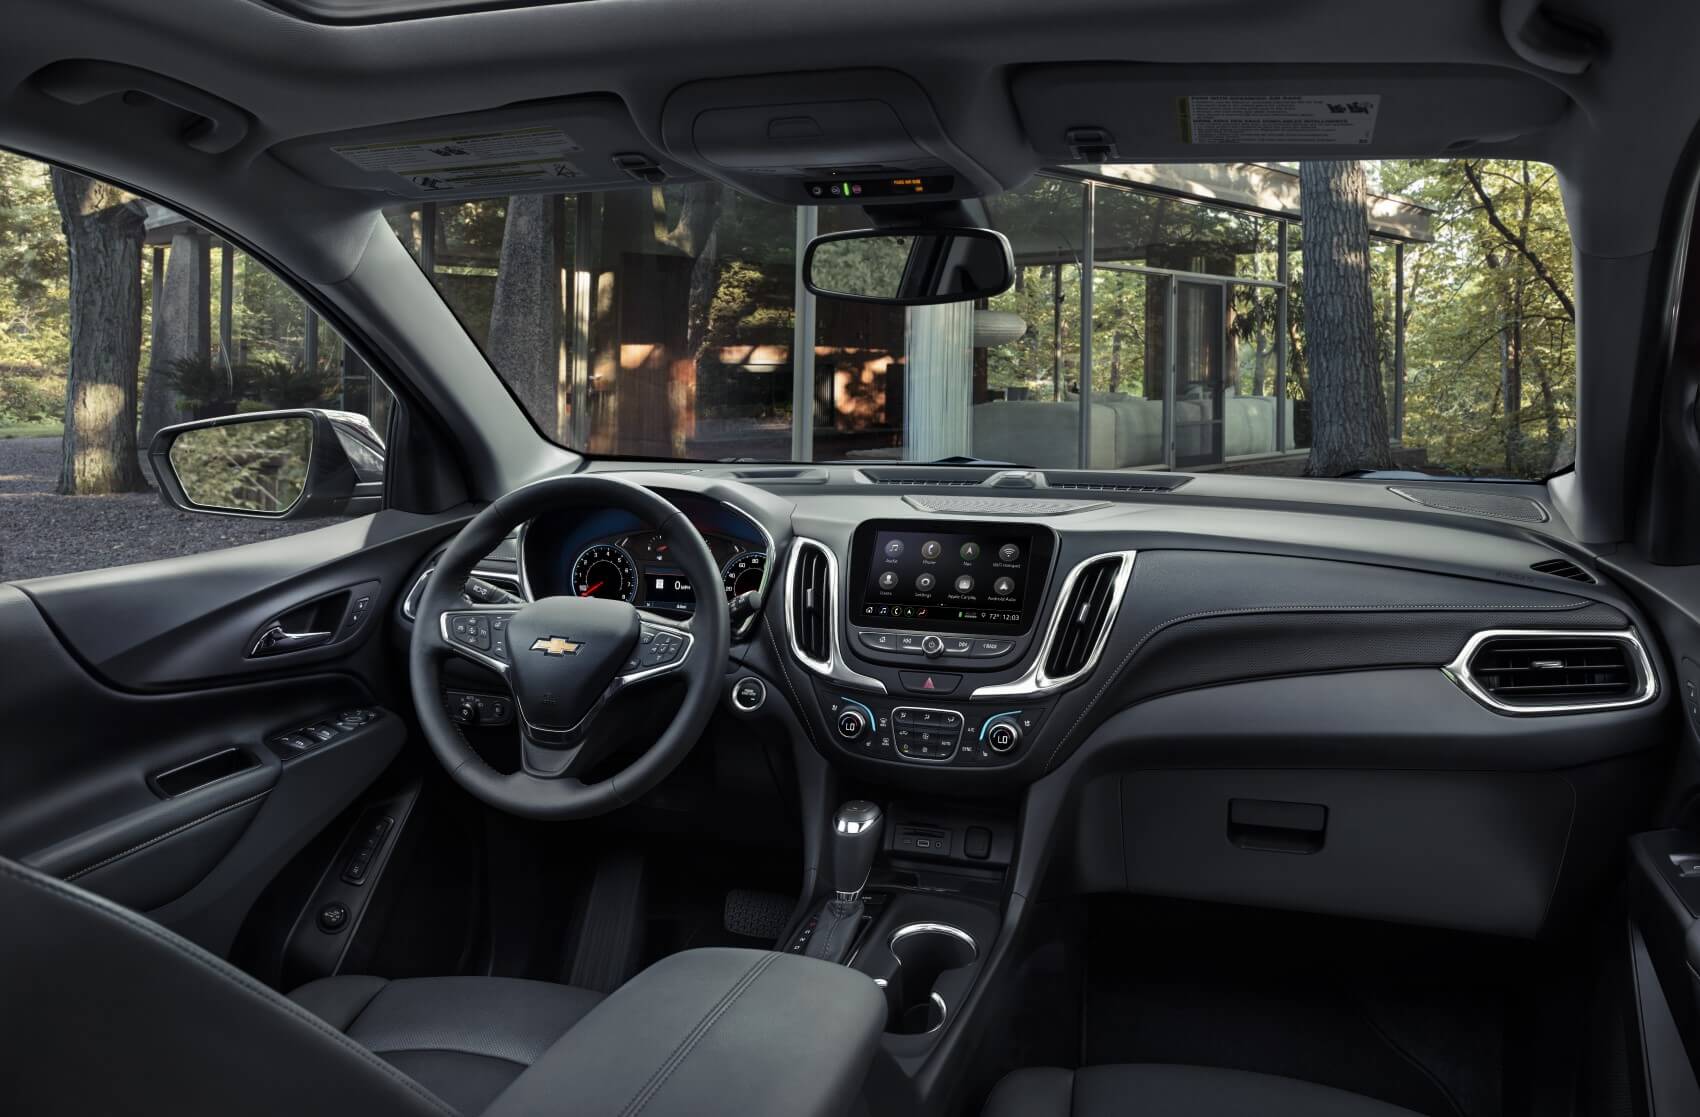 Chevy Equinox interior Comfort